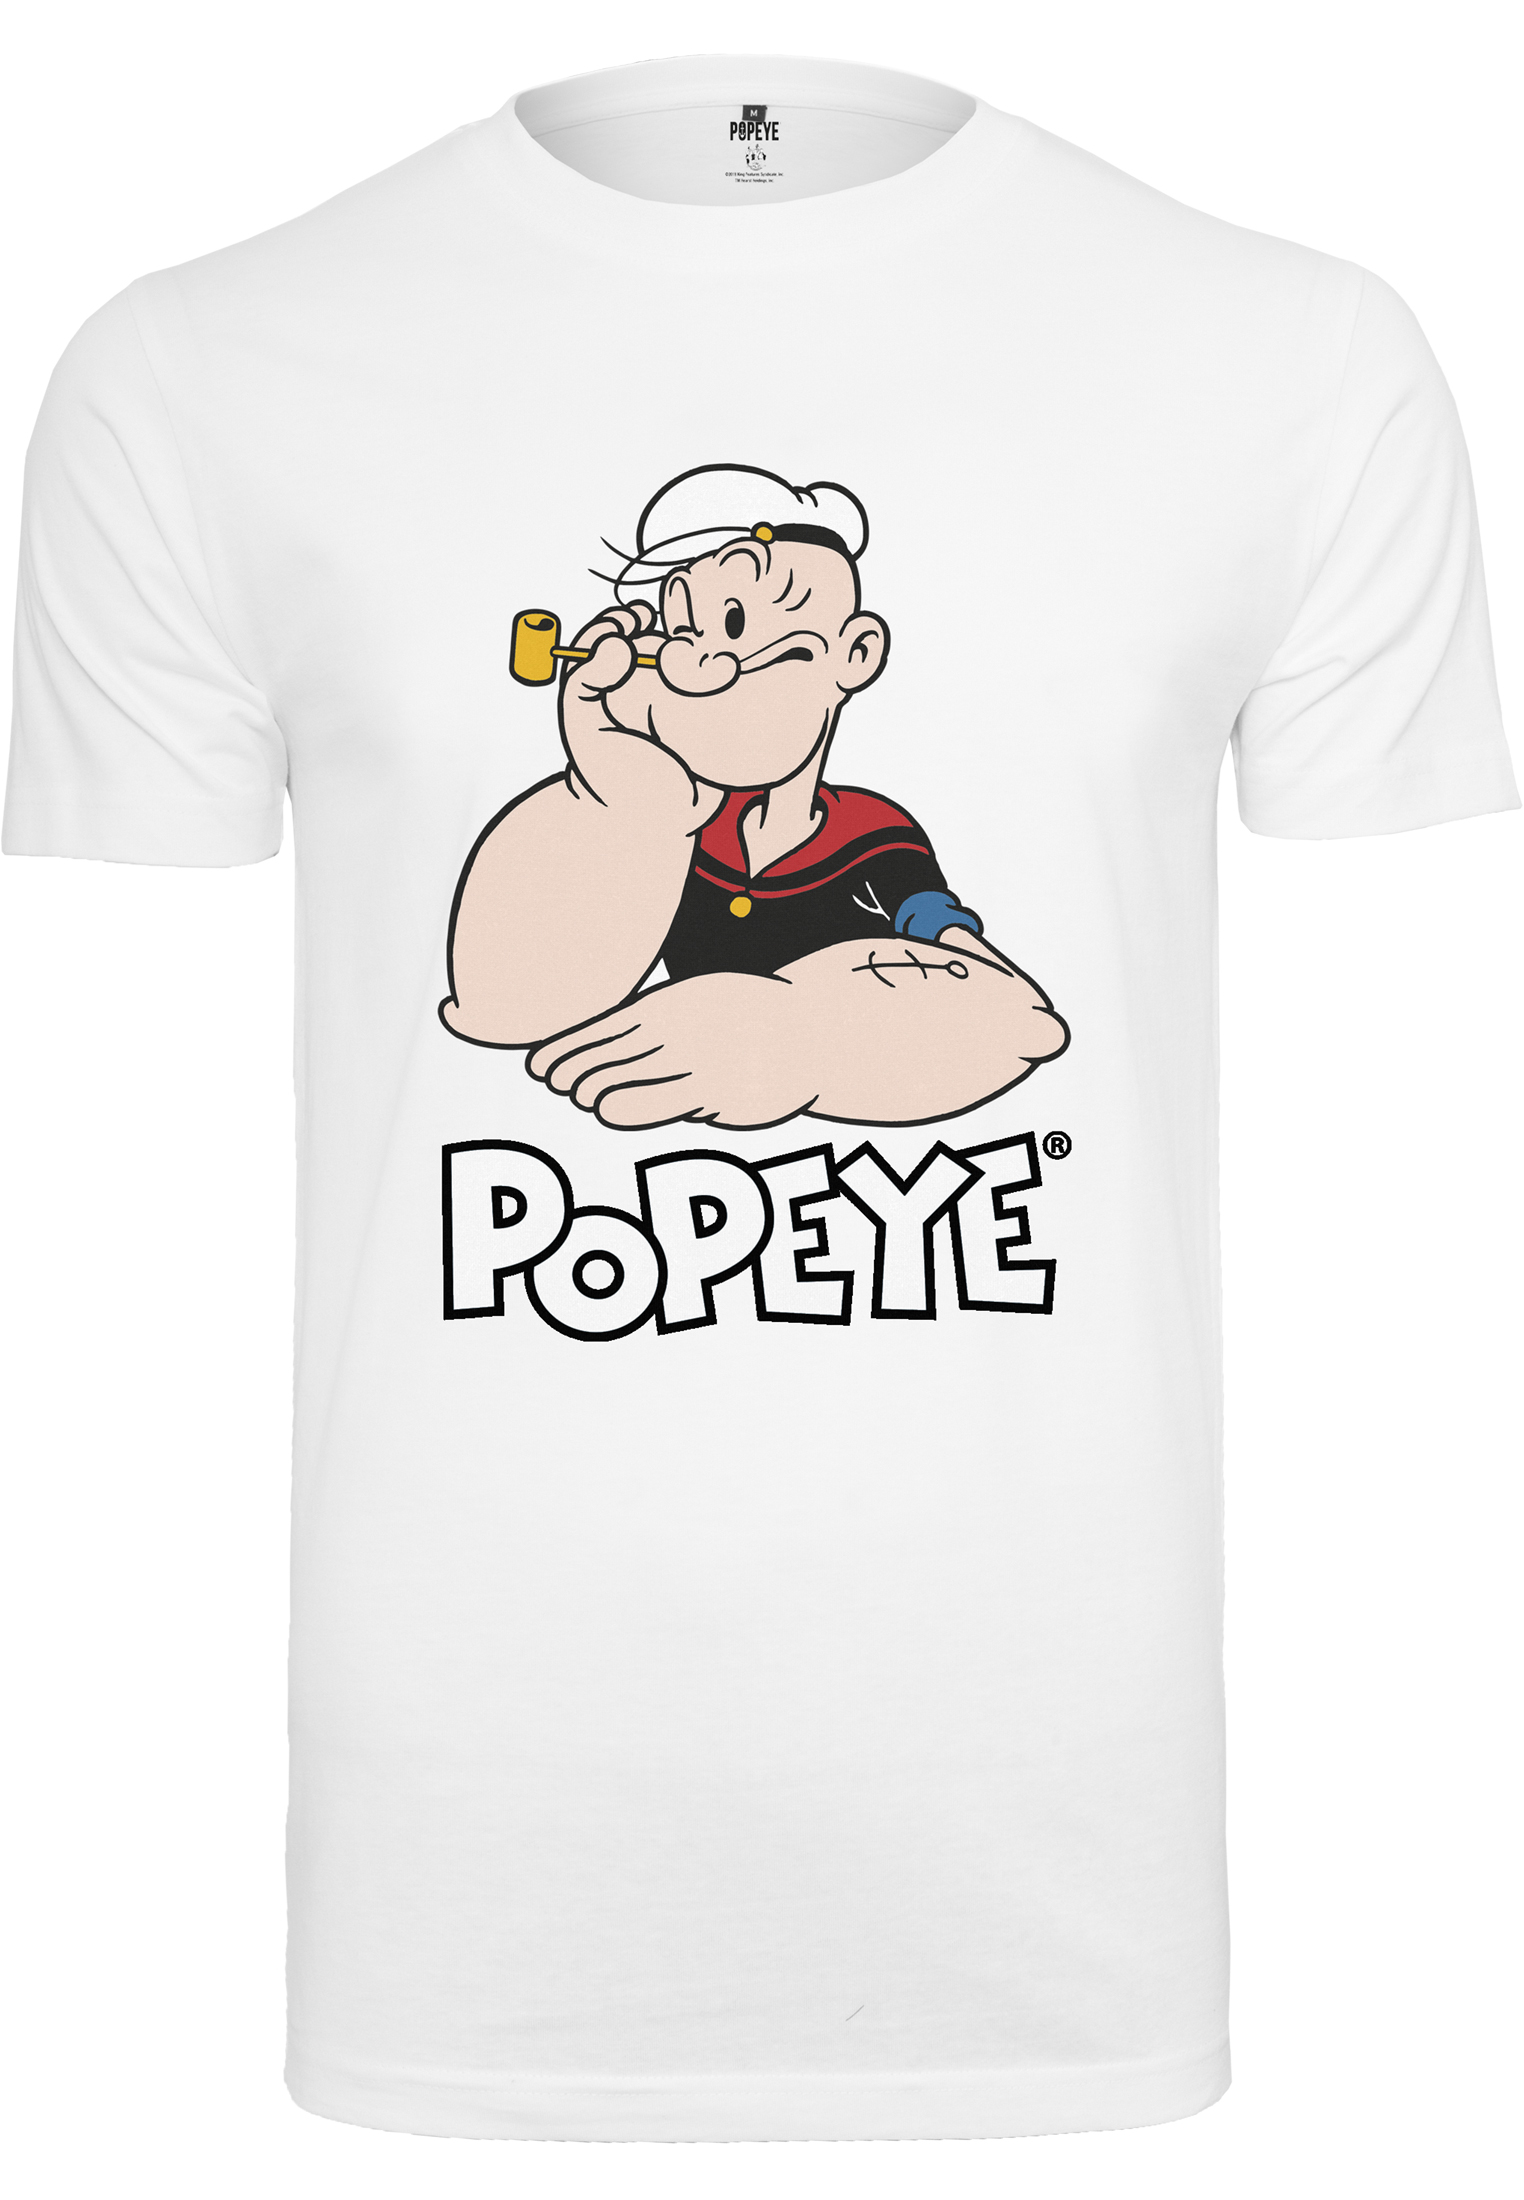 Popeye Pics